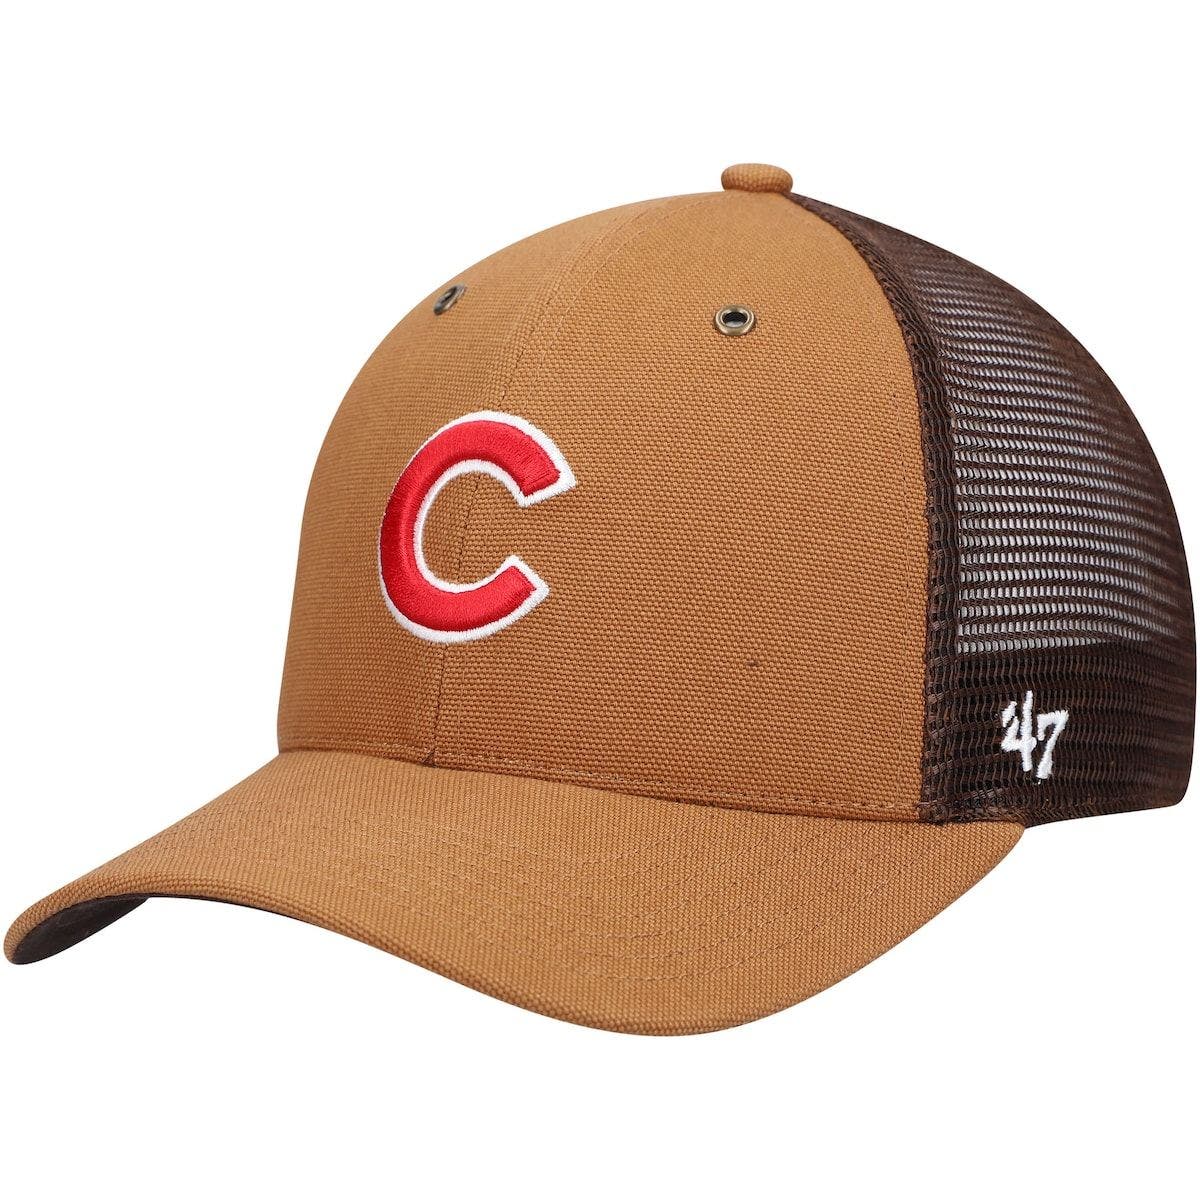 CARHARTT X 47 Men's Carhartt x '47 Brown Chicago Cubs MVP Trucker Snapback Hat at Nordstrom